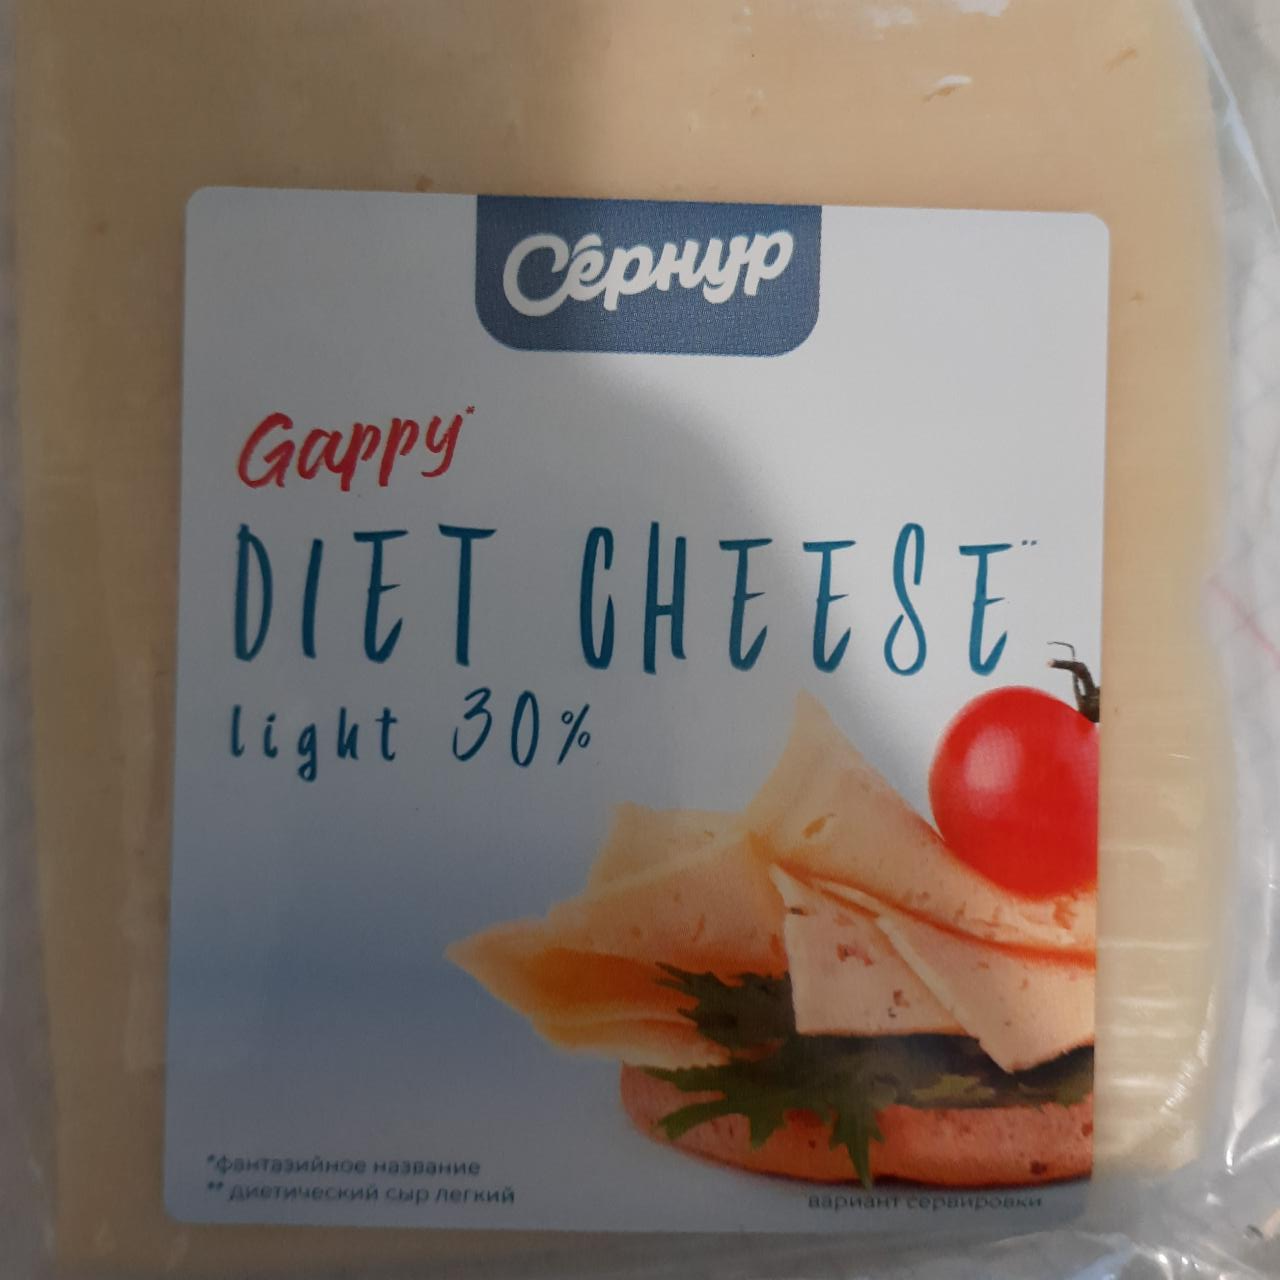 Фото - Сыр diet cheese Сернур